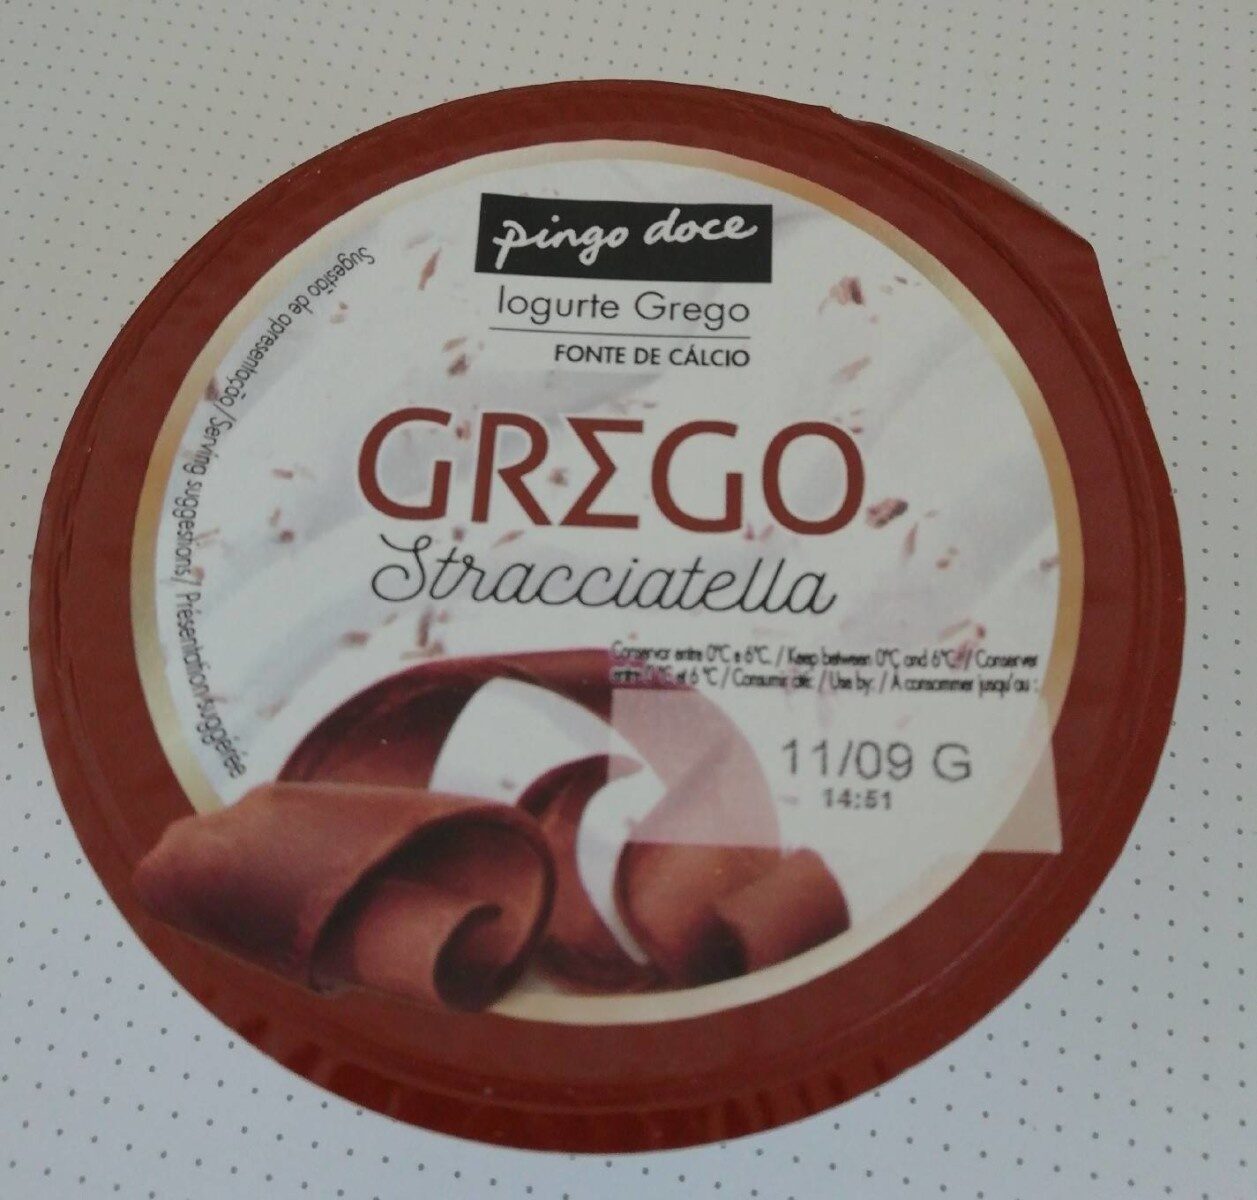 Grego stracciatella - Product - pt